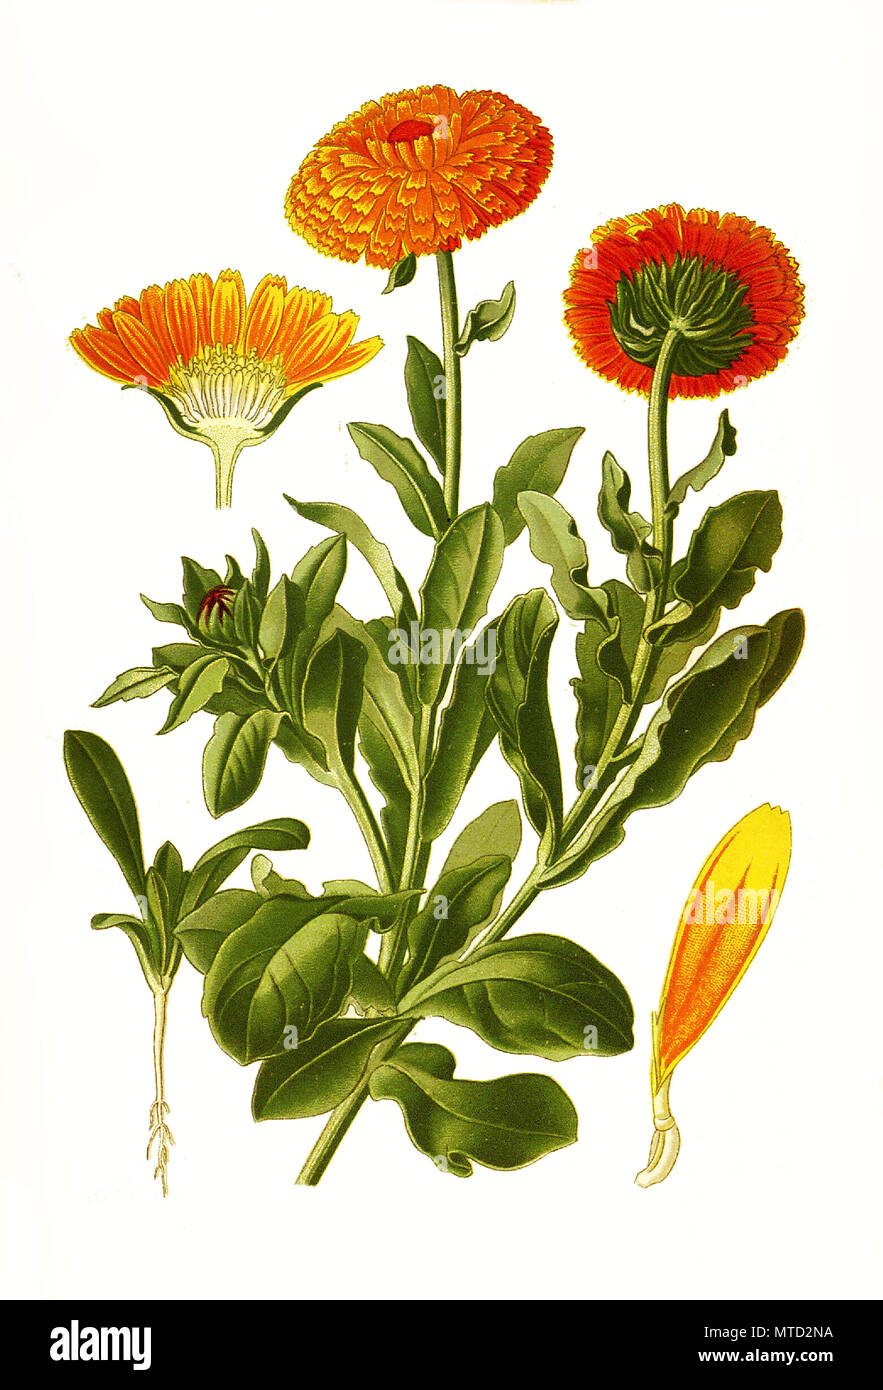 Calendula officinalis, Marigold, pot marigold, ruddles, common marigold or Scotch marigold. Ringelblume, digital improved reproduction from a print of the 19th century Stock Photo